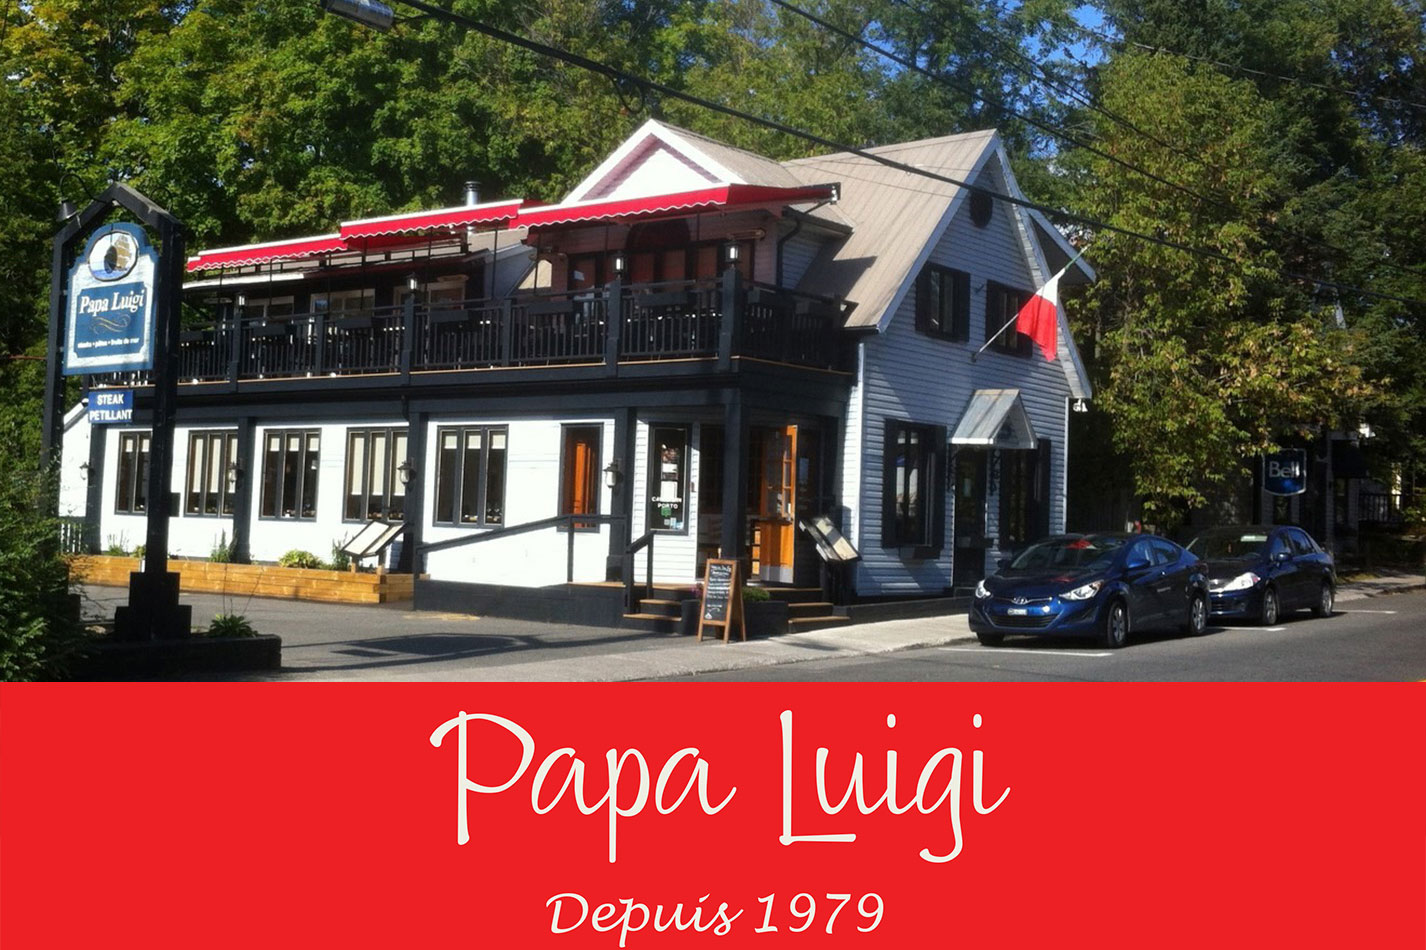 Menu au Restaurant Papa Luigi, Saint-Sauveur